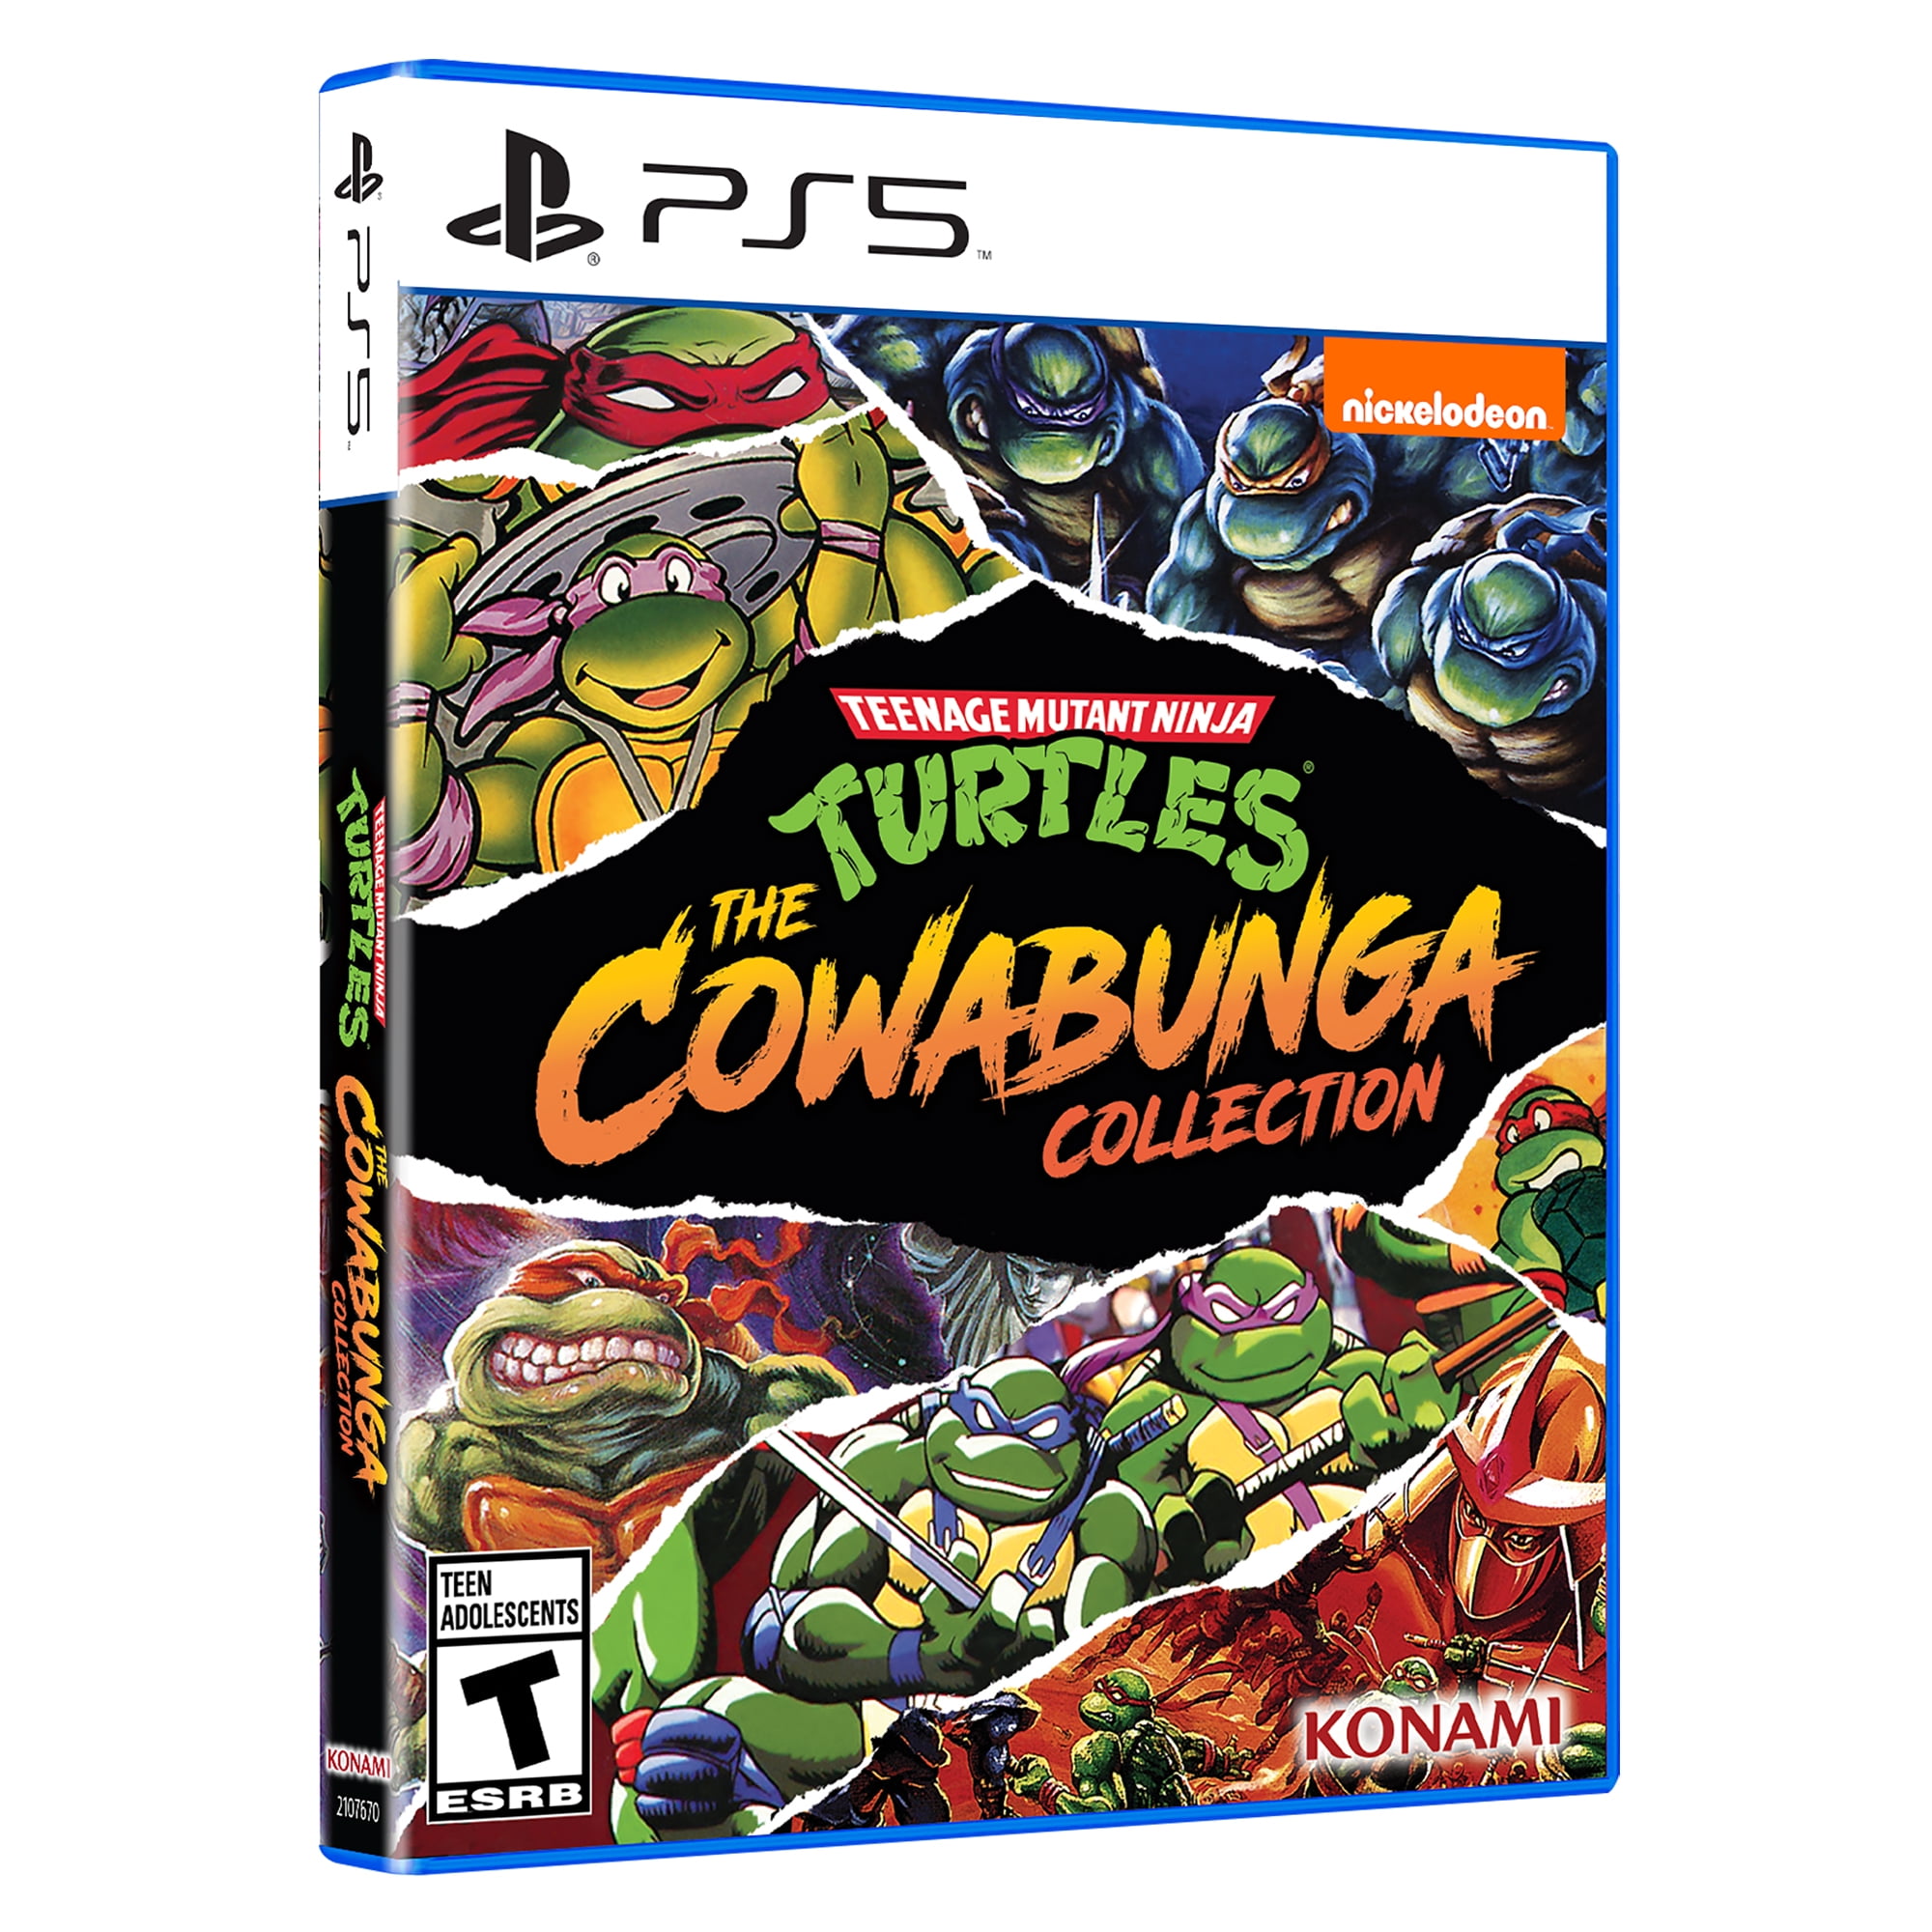 Turtles cowabunga collection. TMNT Cowabunga collection Limited Edition. The Cowabunga collection обложка Xbox. The Cowabunga collection обложка Xbox one. The Cowabunga collection обложка PS.